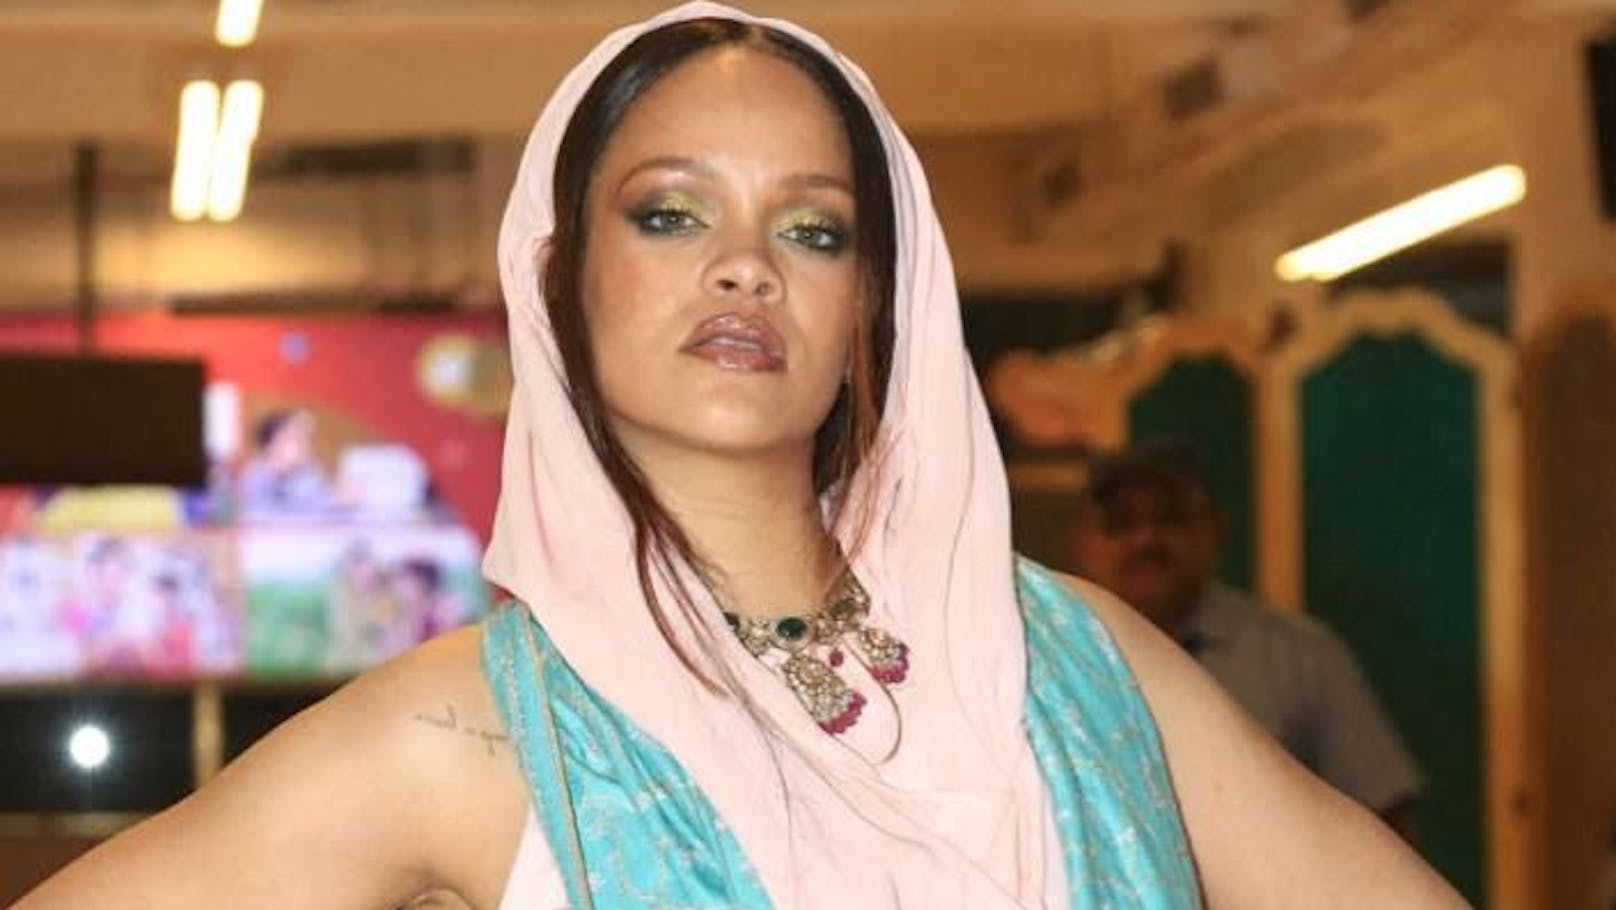 Protz-Feier: Rihanna spielt Konzert für 6 Millionen €